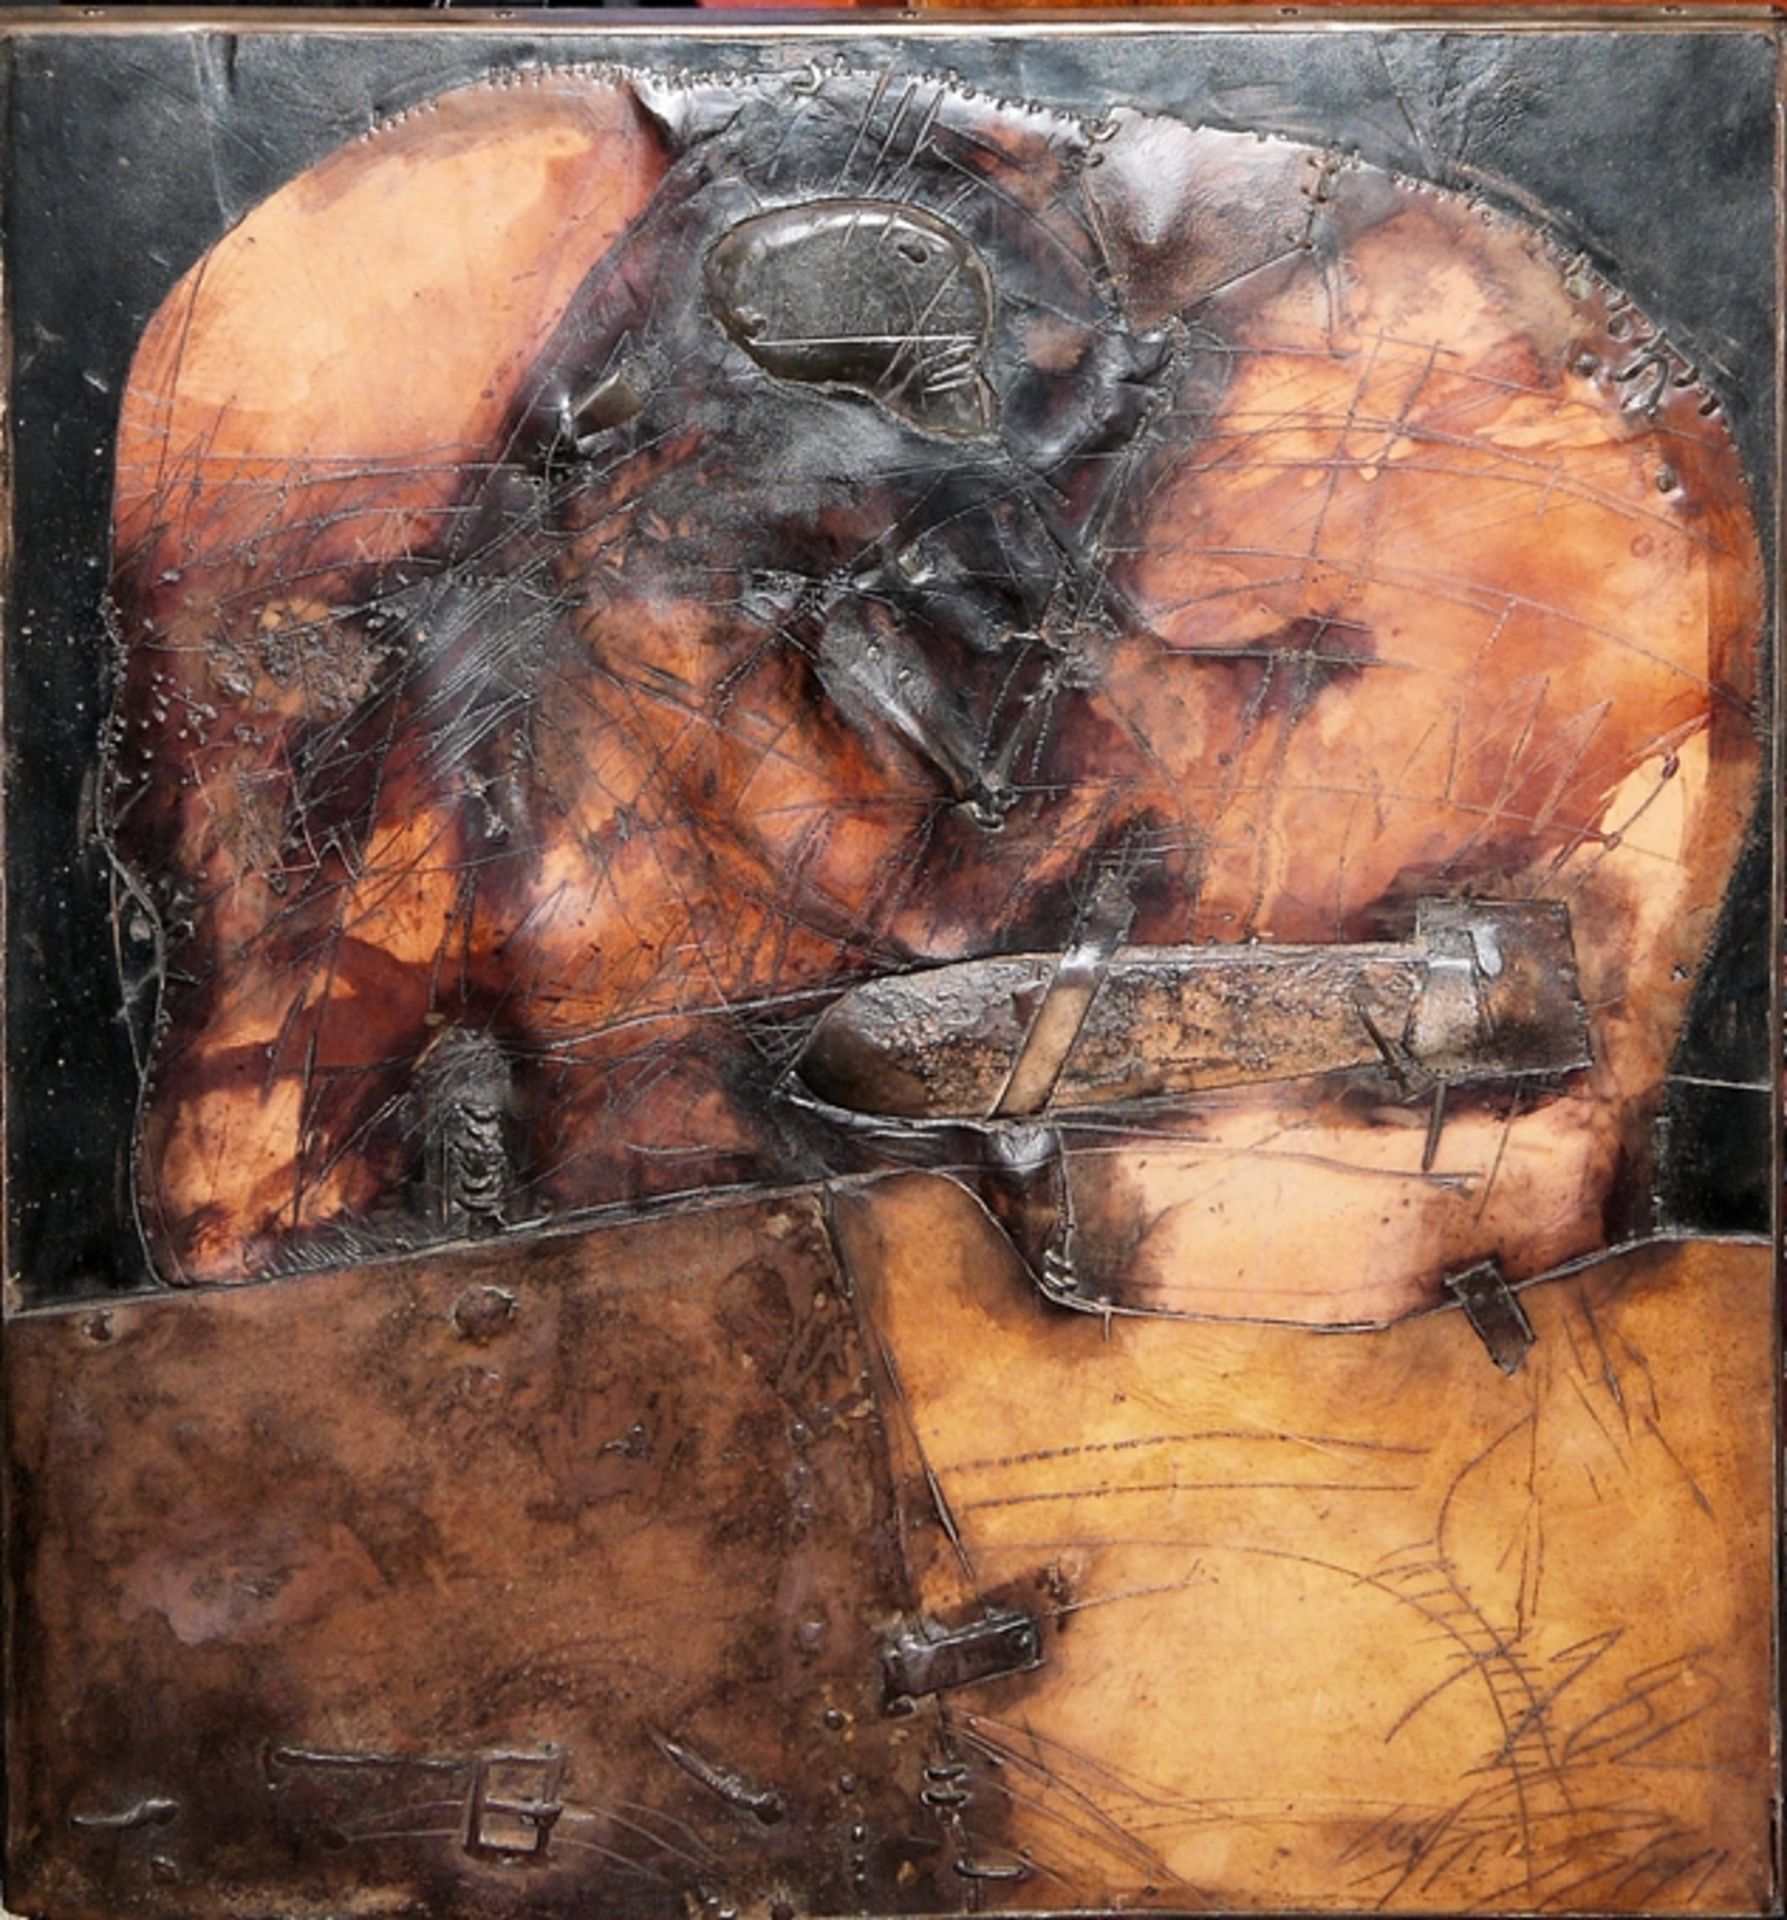 Wolfgang Bier, "Verschnürter, geschundener Kopf", großes Lederbild aus der Retrospektive Museum Wür